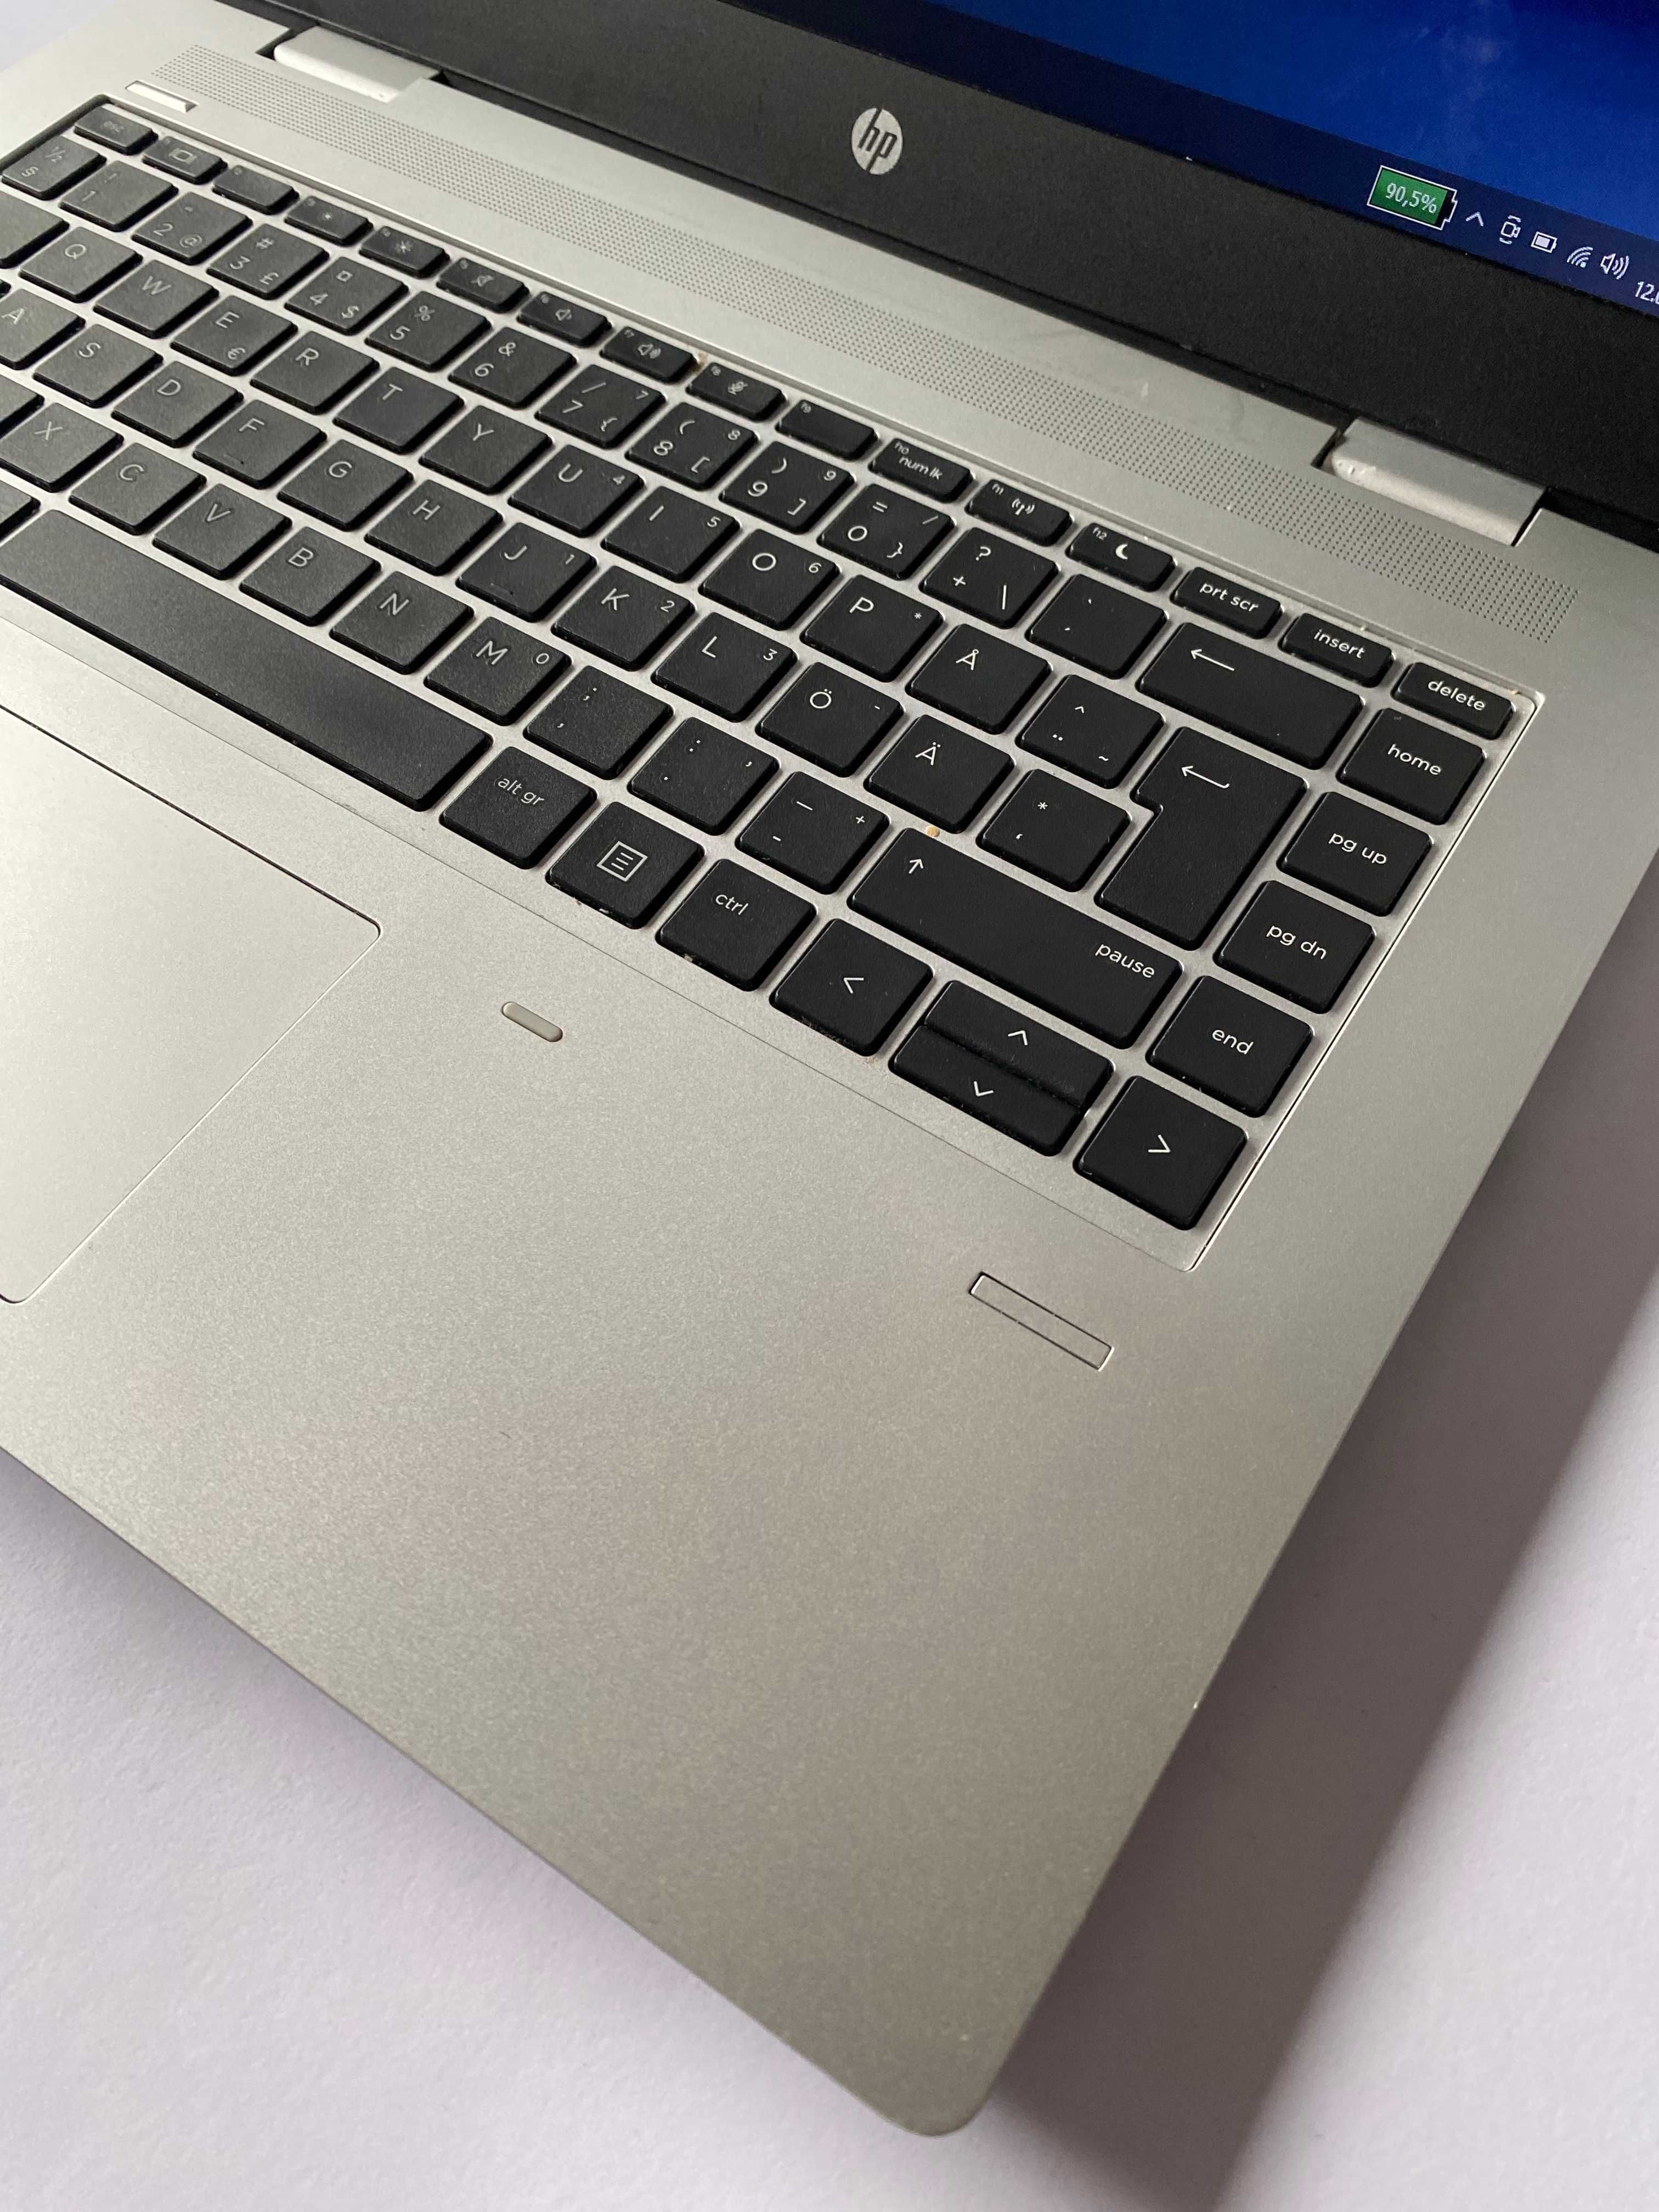 Laptop HP ProBook 645 G4 14" AMD Ryzen 3 8 GB / 256 GB